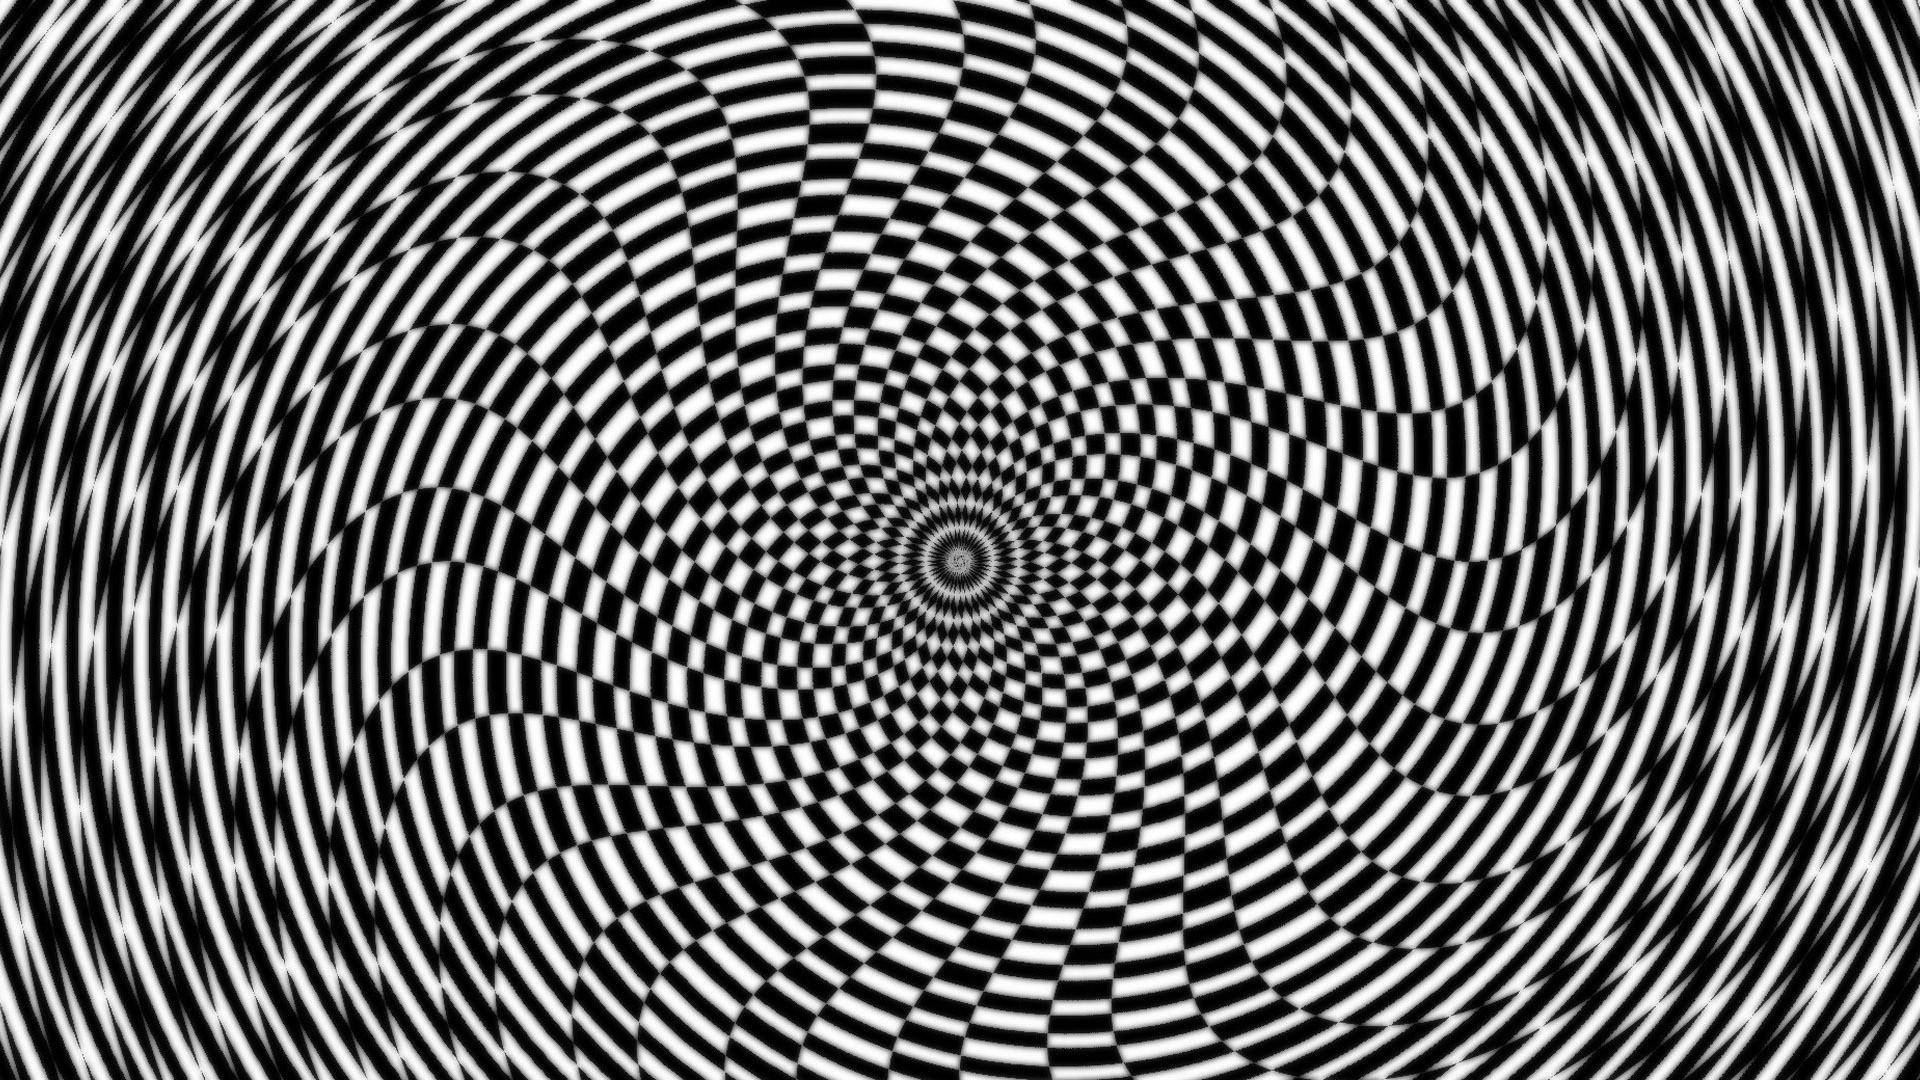 Dizzying Spiral Optical Art Background